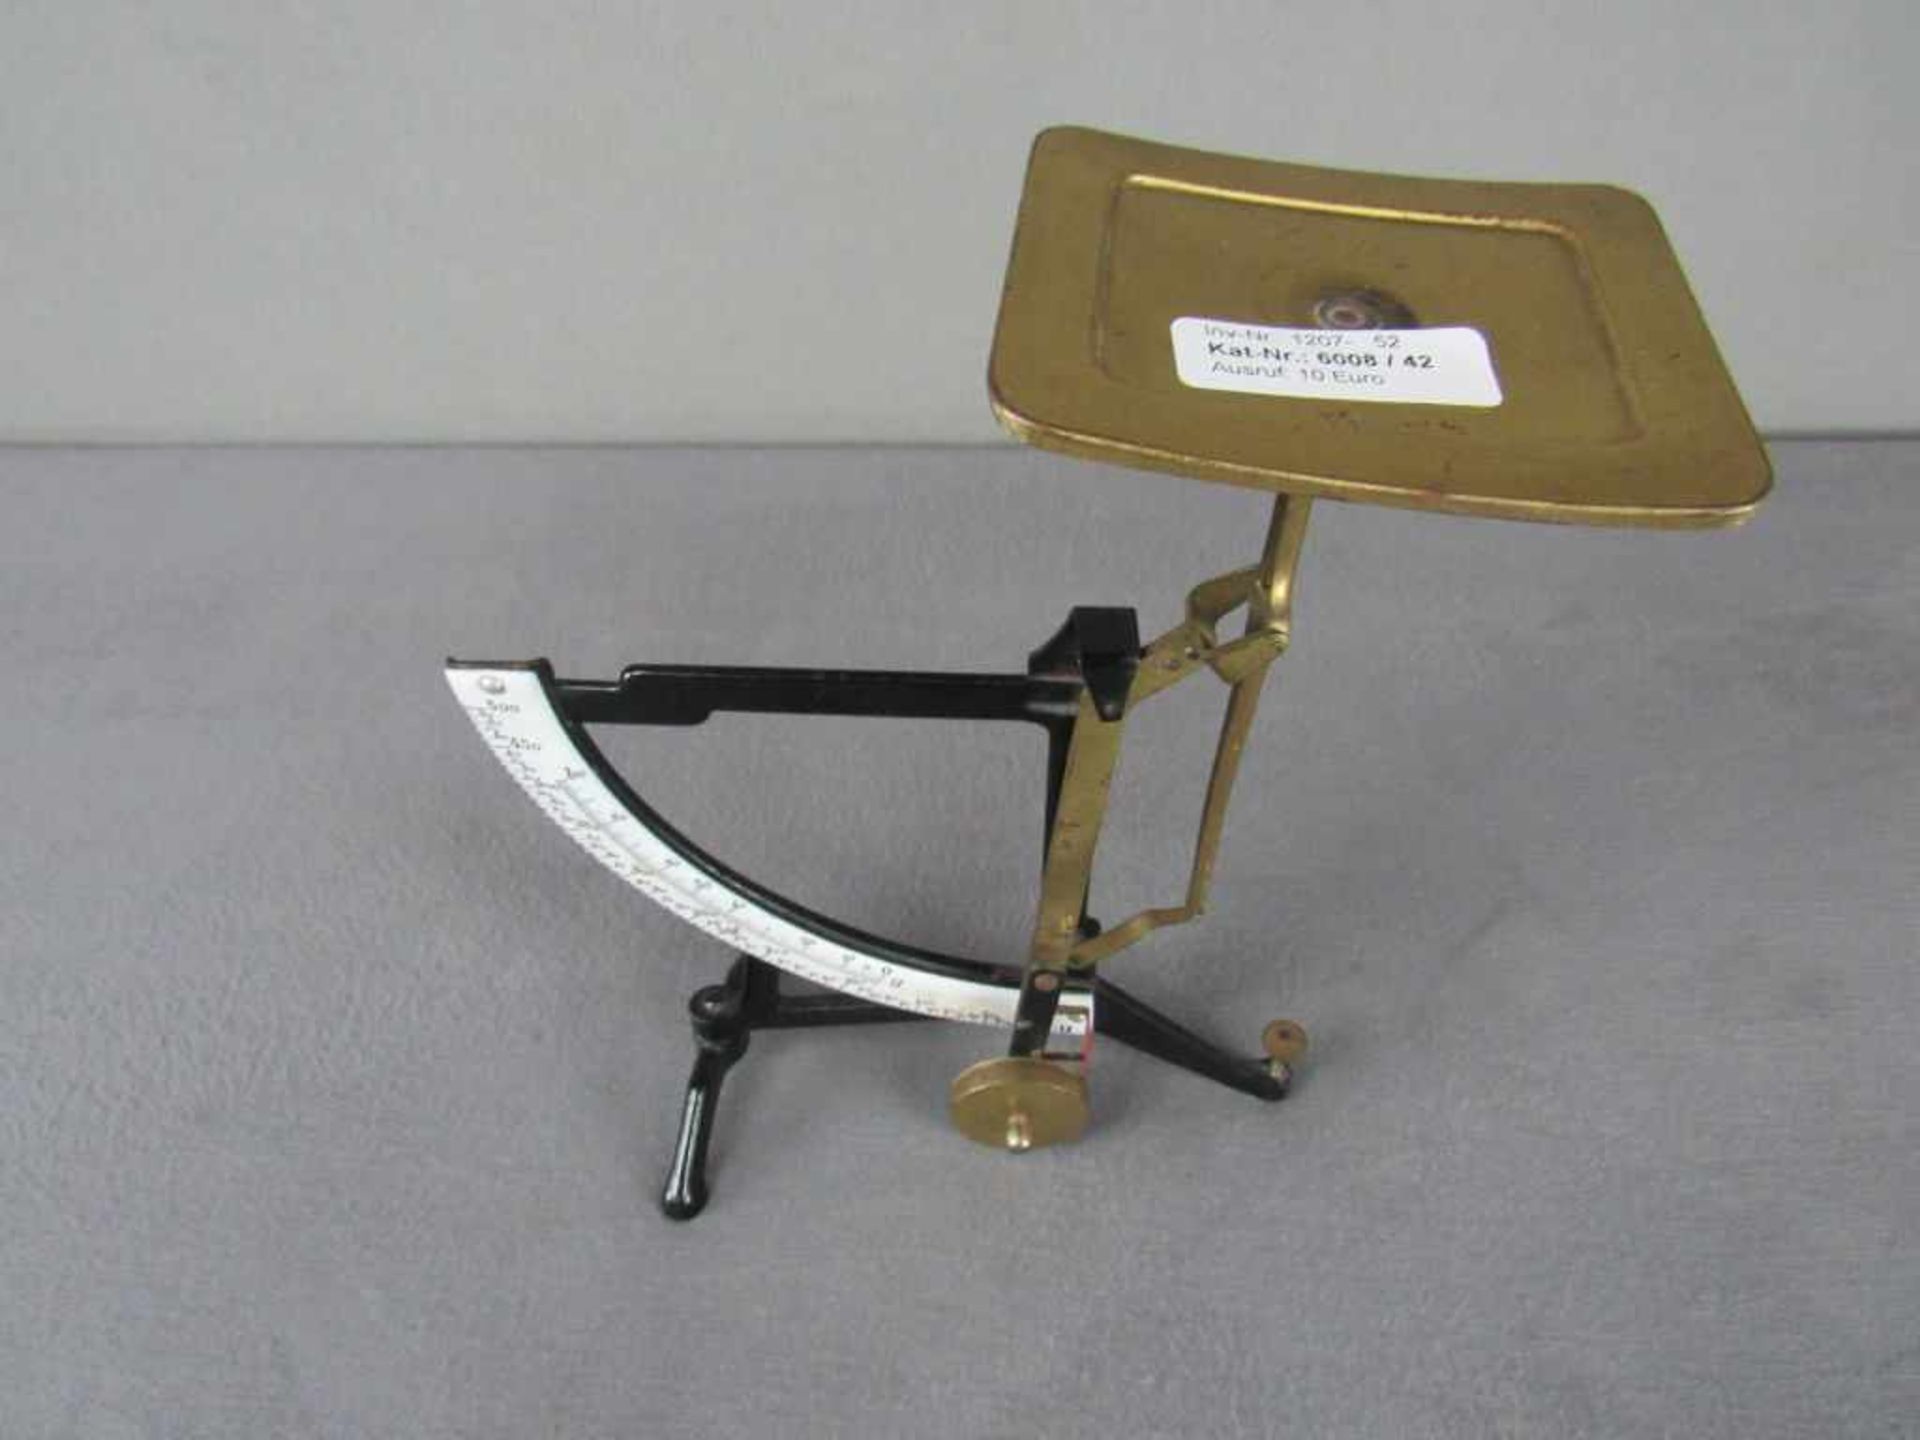 Art Deco Briefwaage um 1920 28cm hoch- - -20.00 % buyer's premium on the hammer price19.00 % VAT - Image 3 of 3